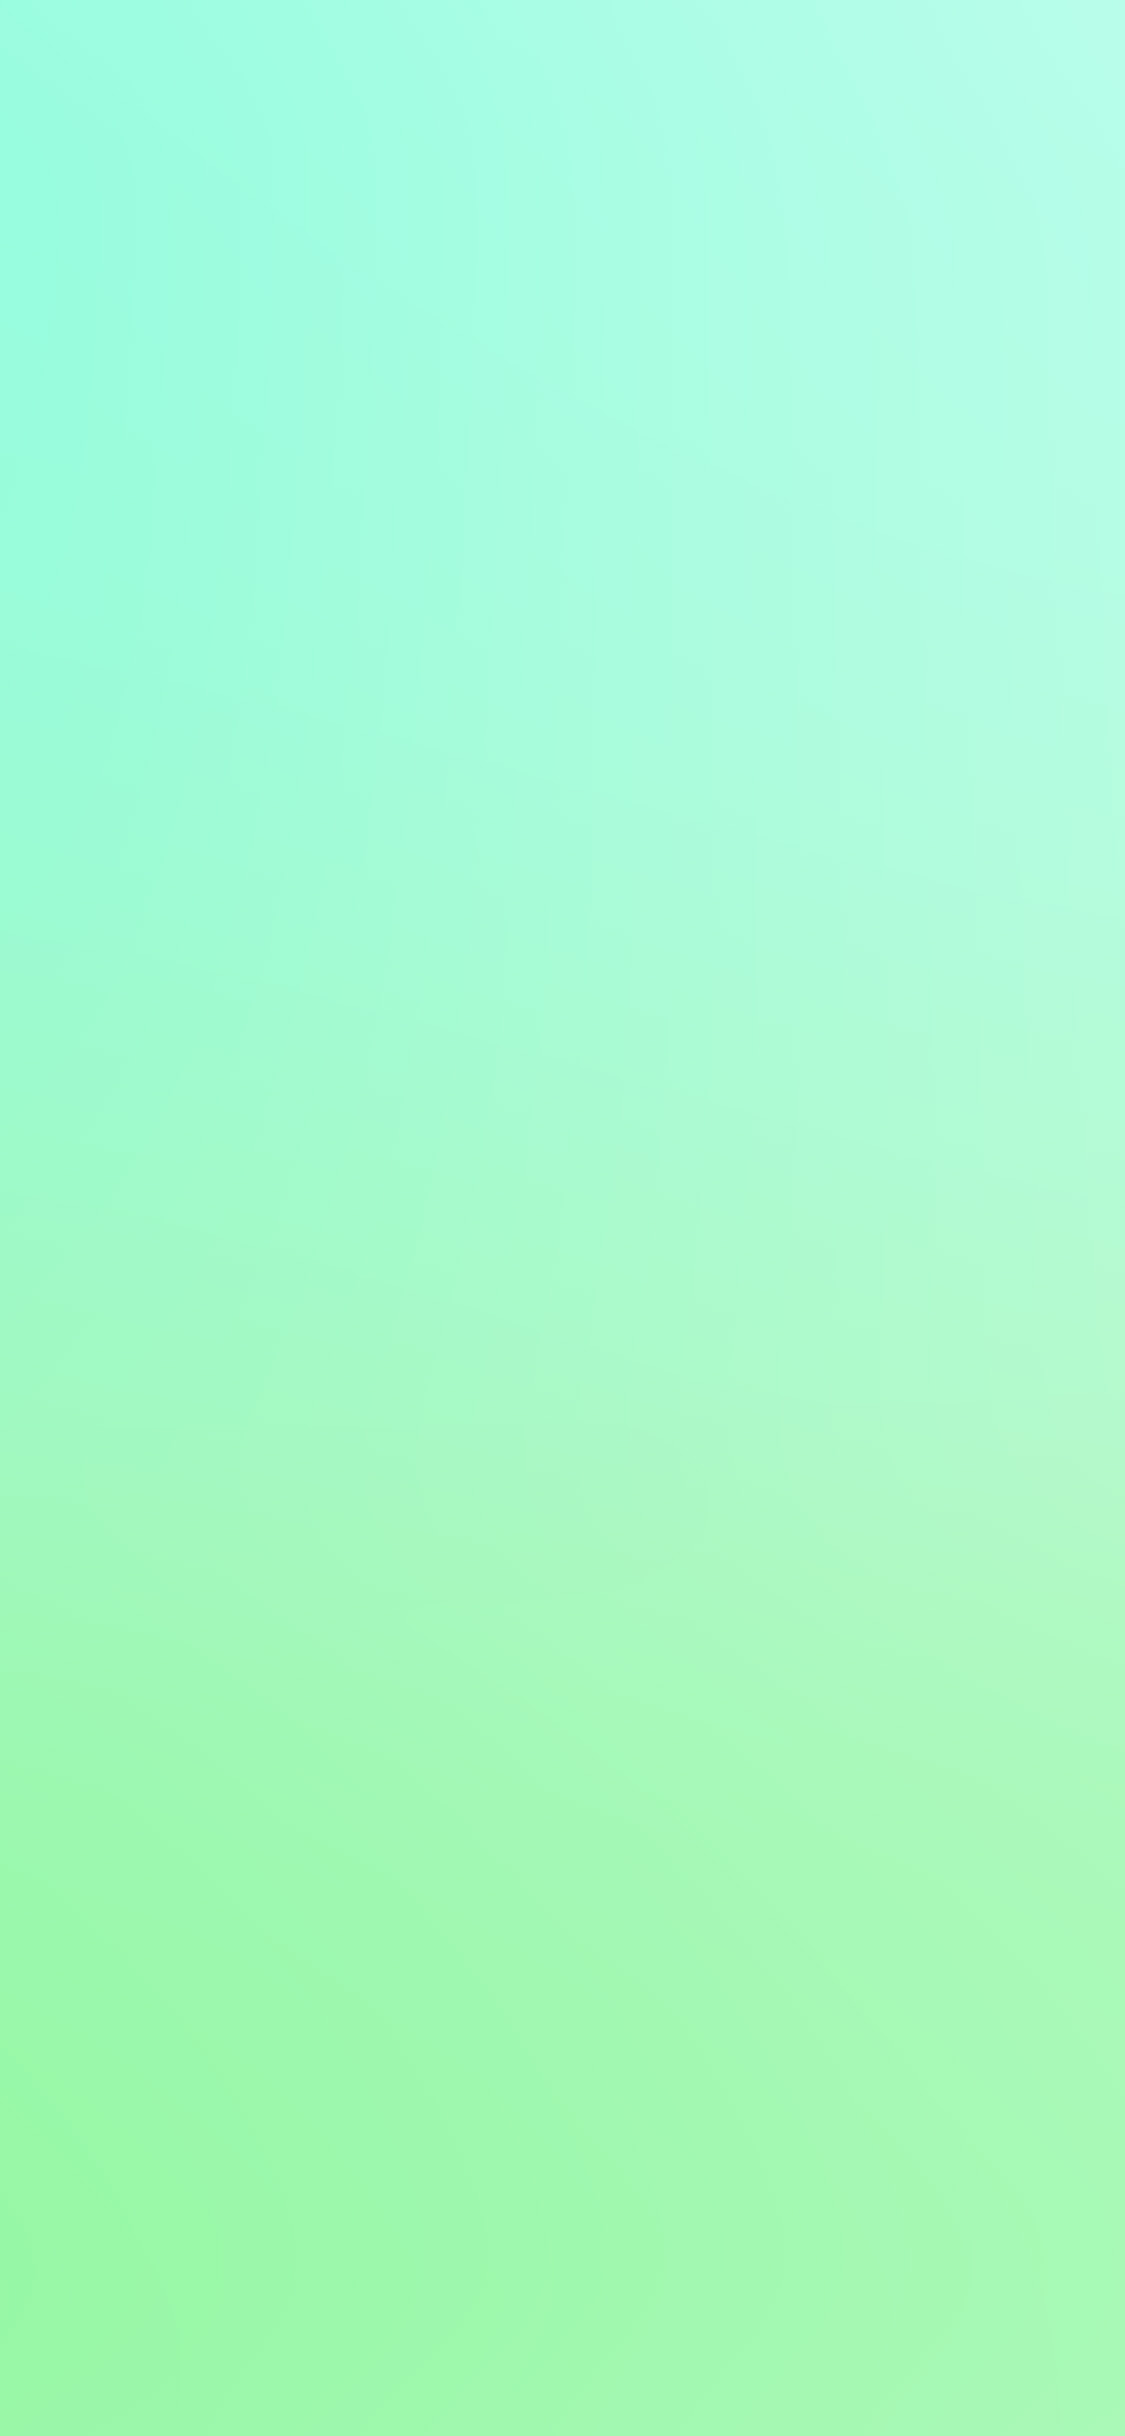 iPhone-11-wallpaper-cool-pastel-blur-gradation-mint-green-iphone-X